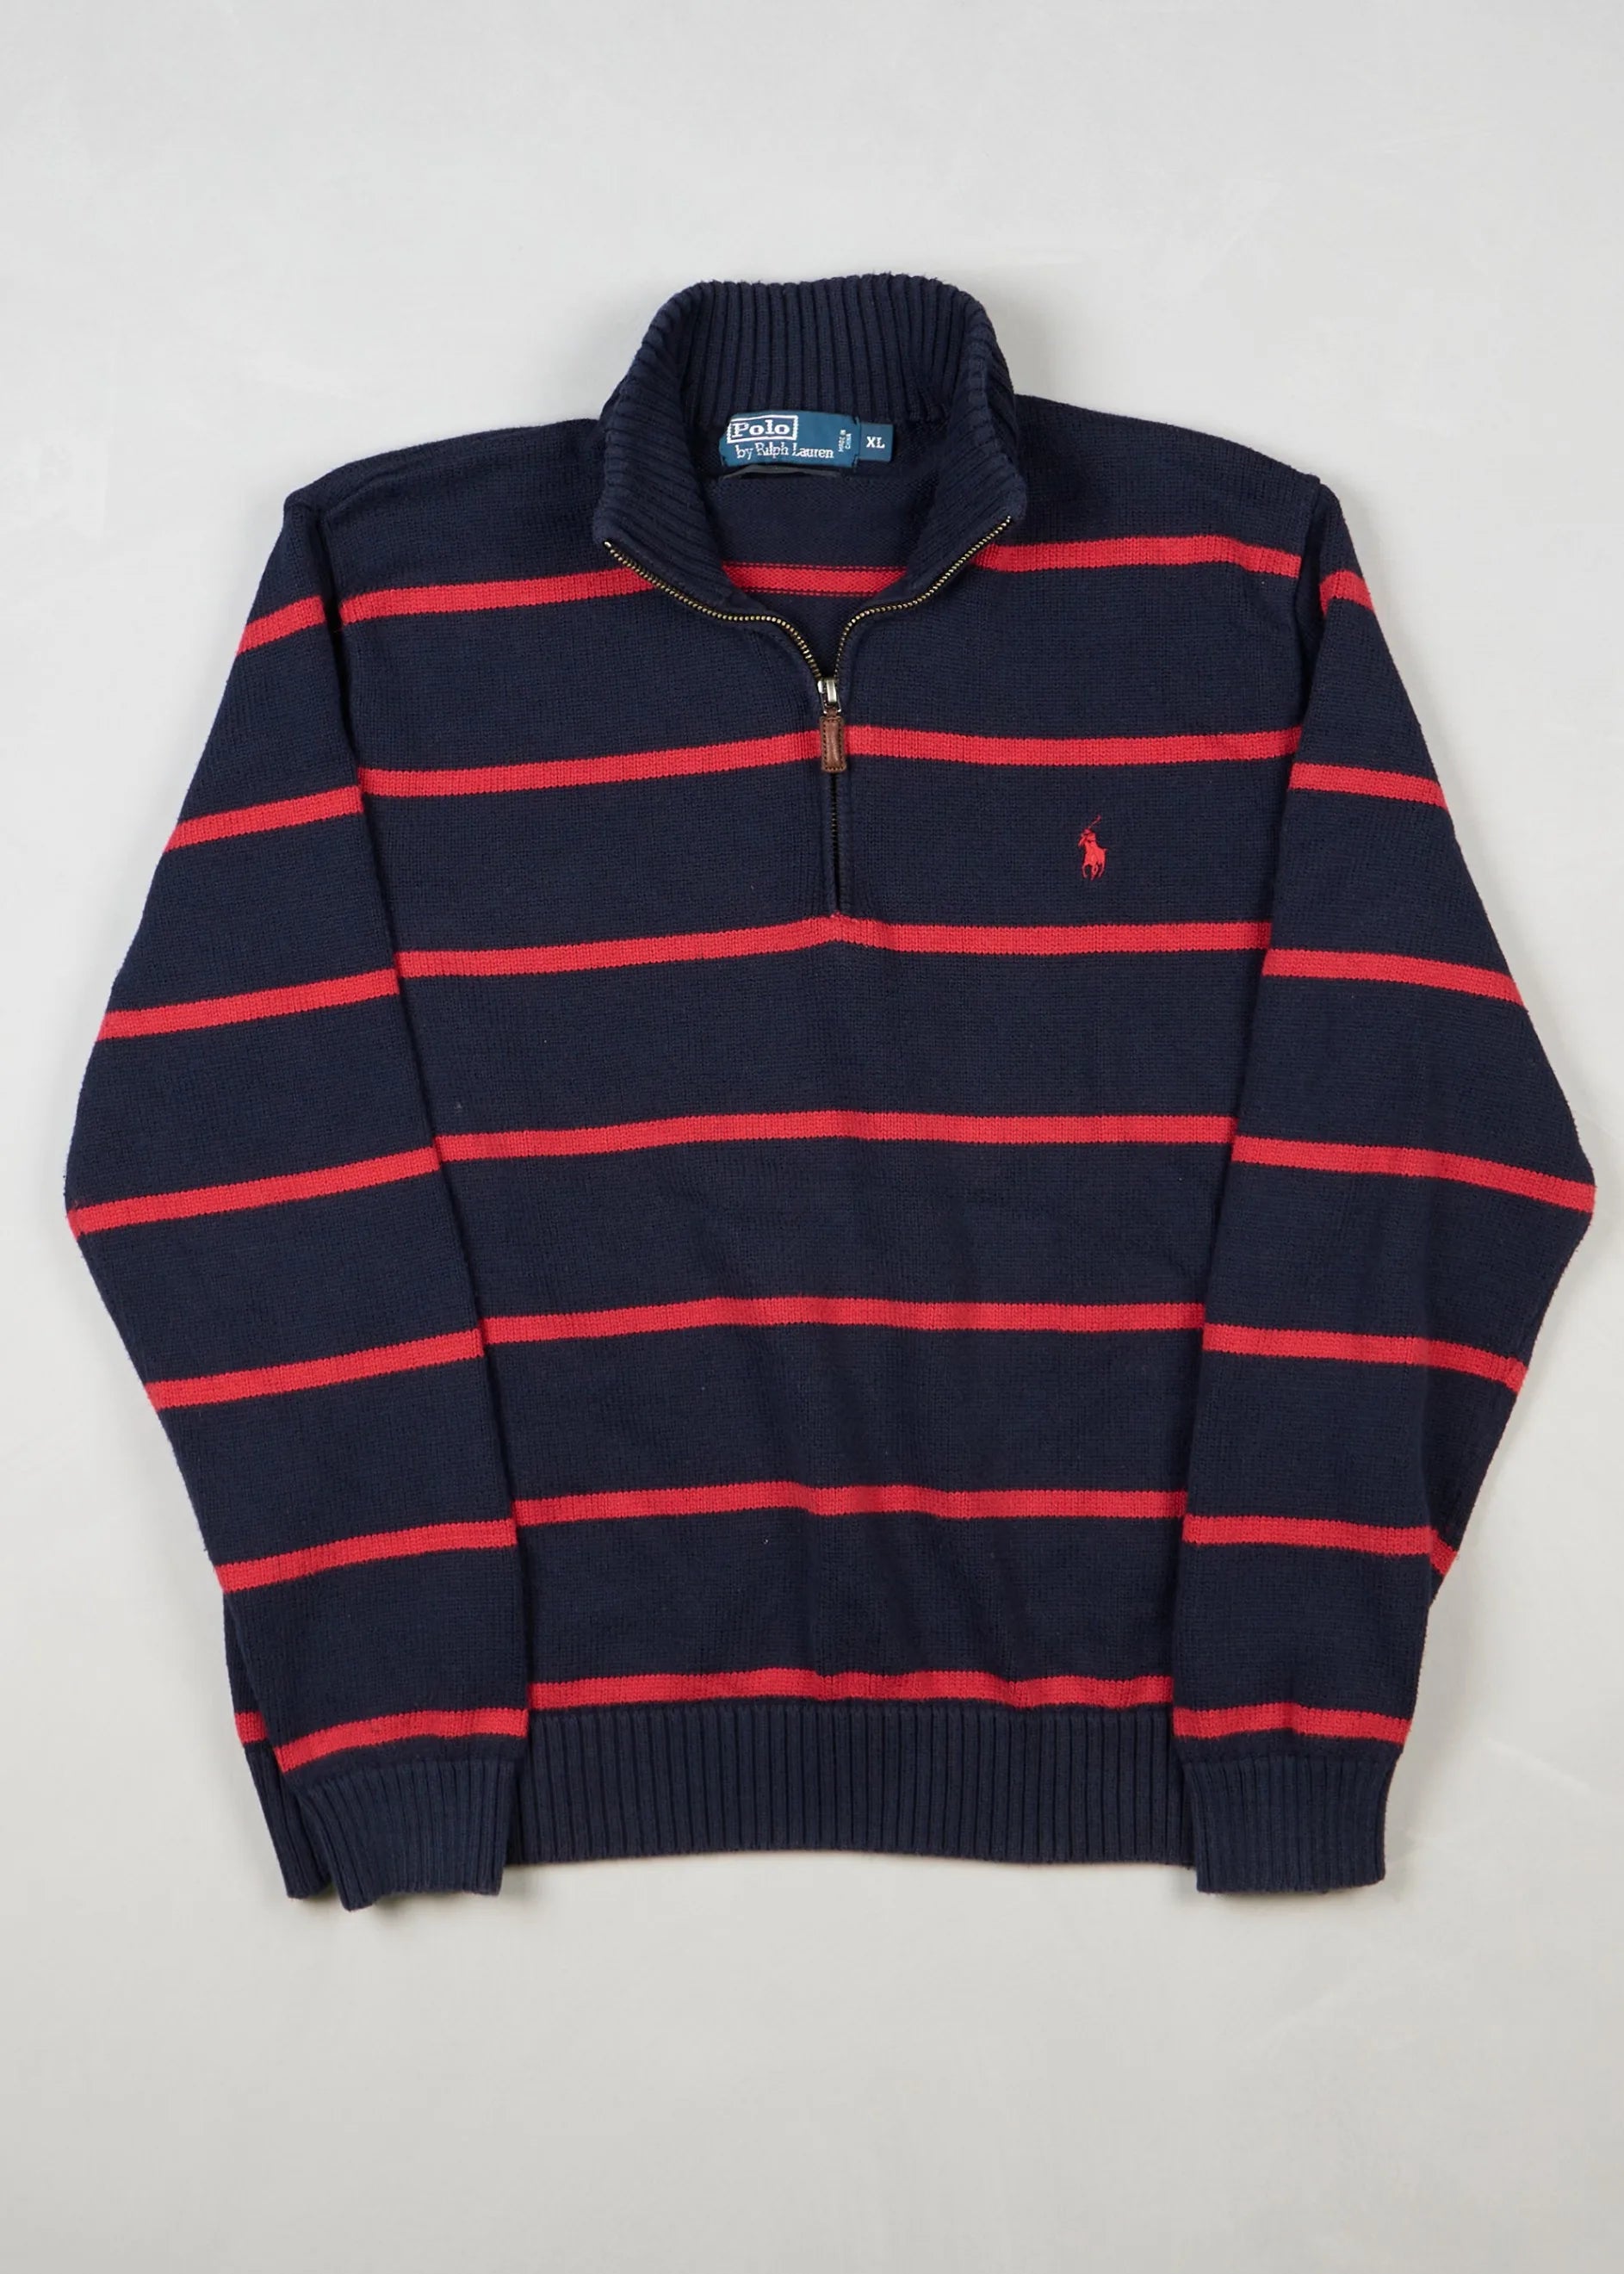 Ralph Lauren - Sweater (M)